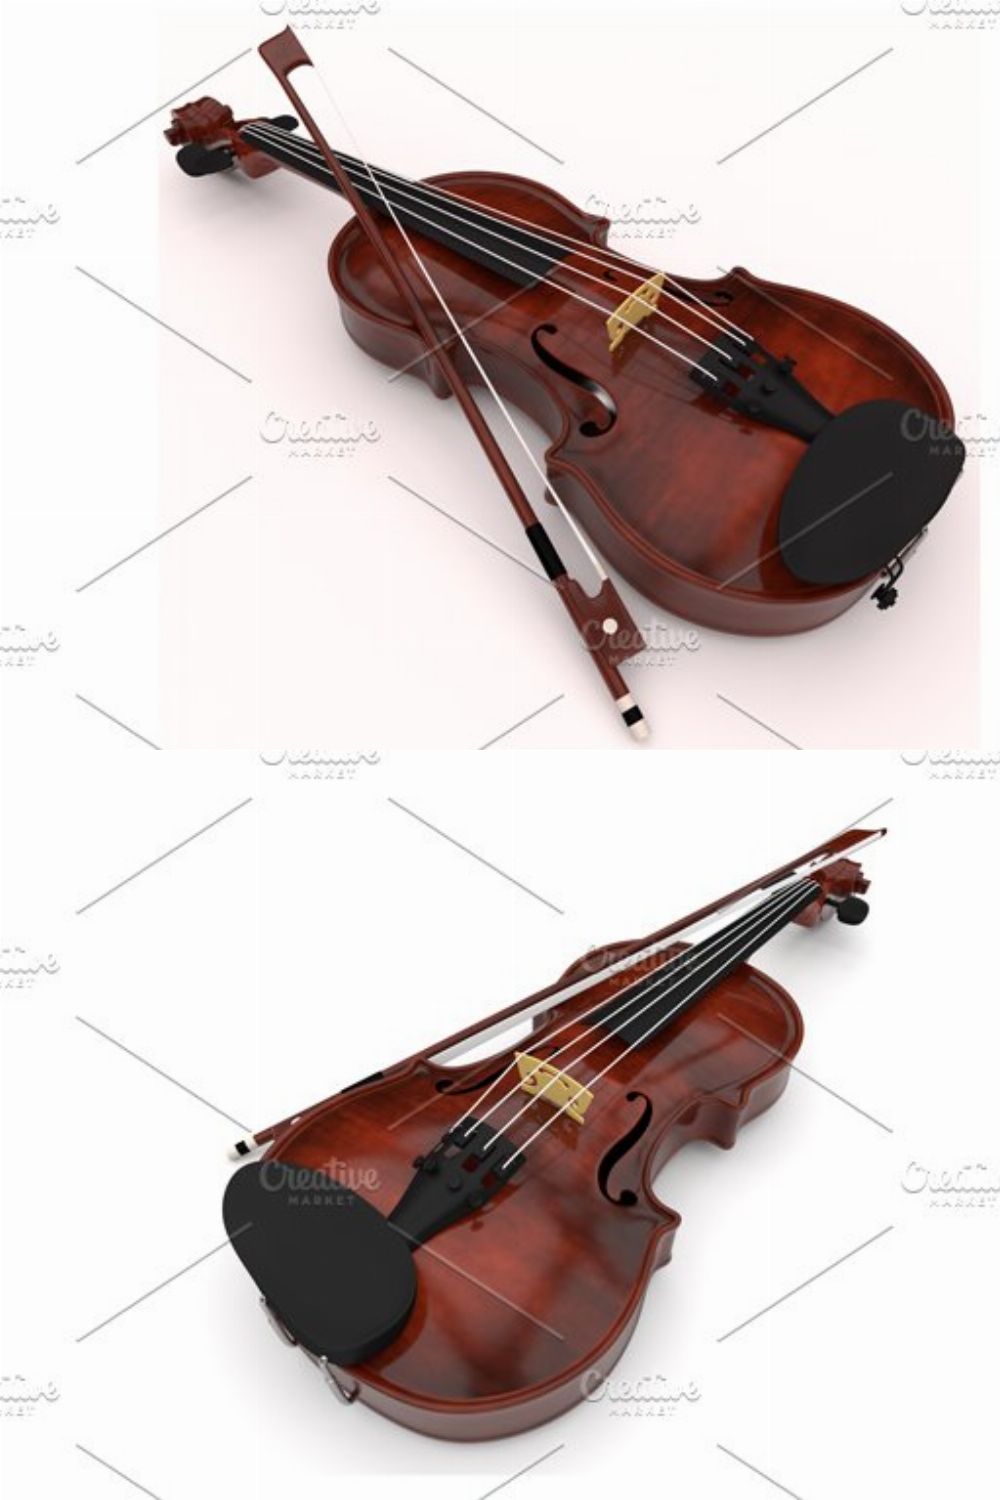 Set of violin pinterest preview image.